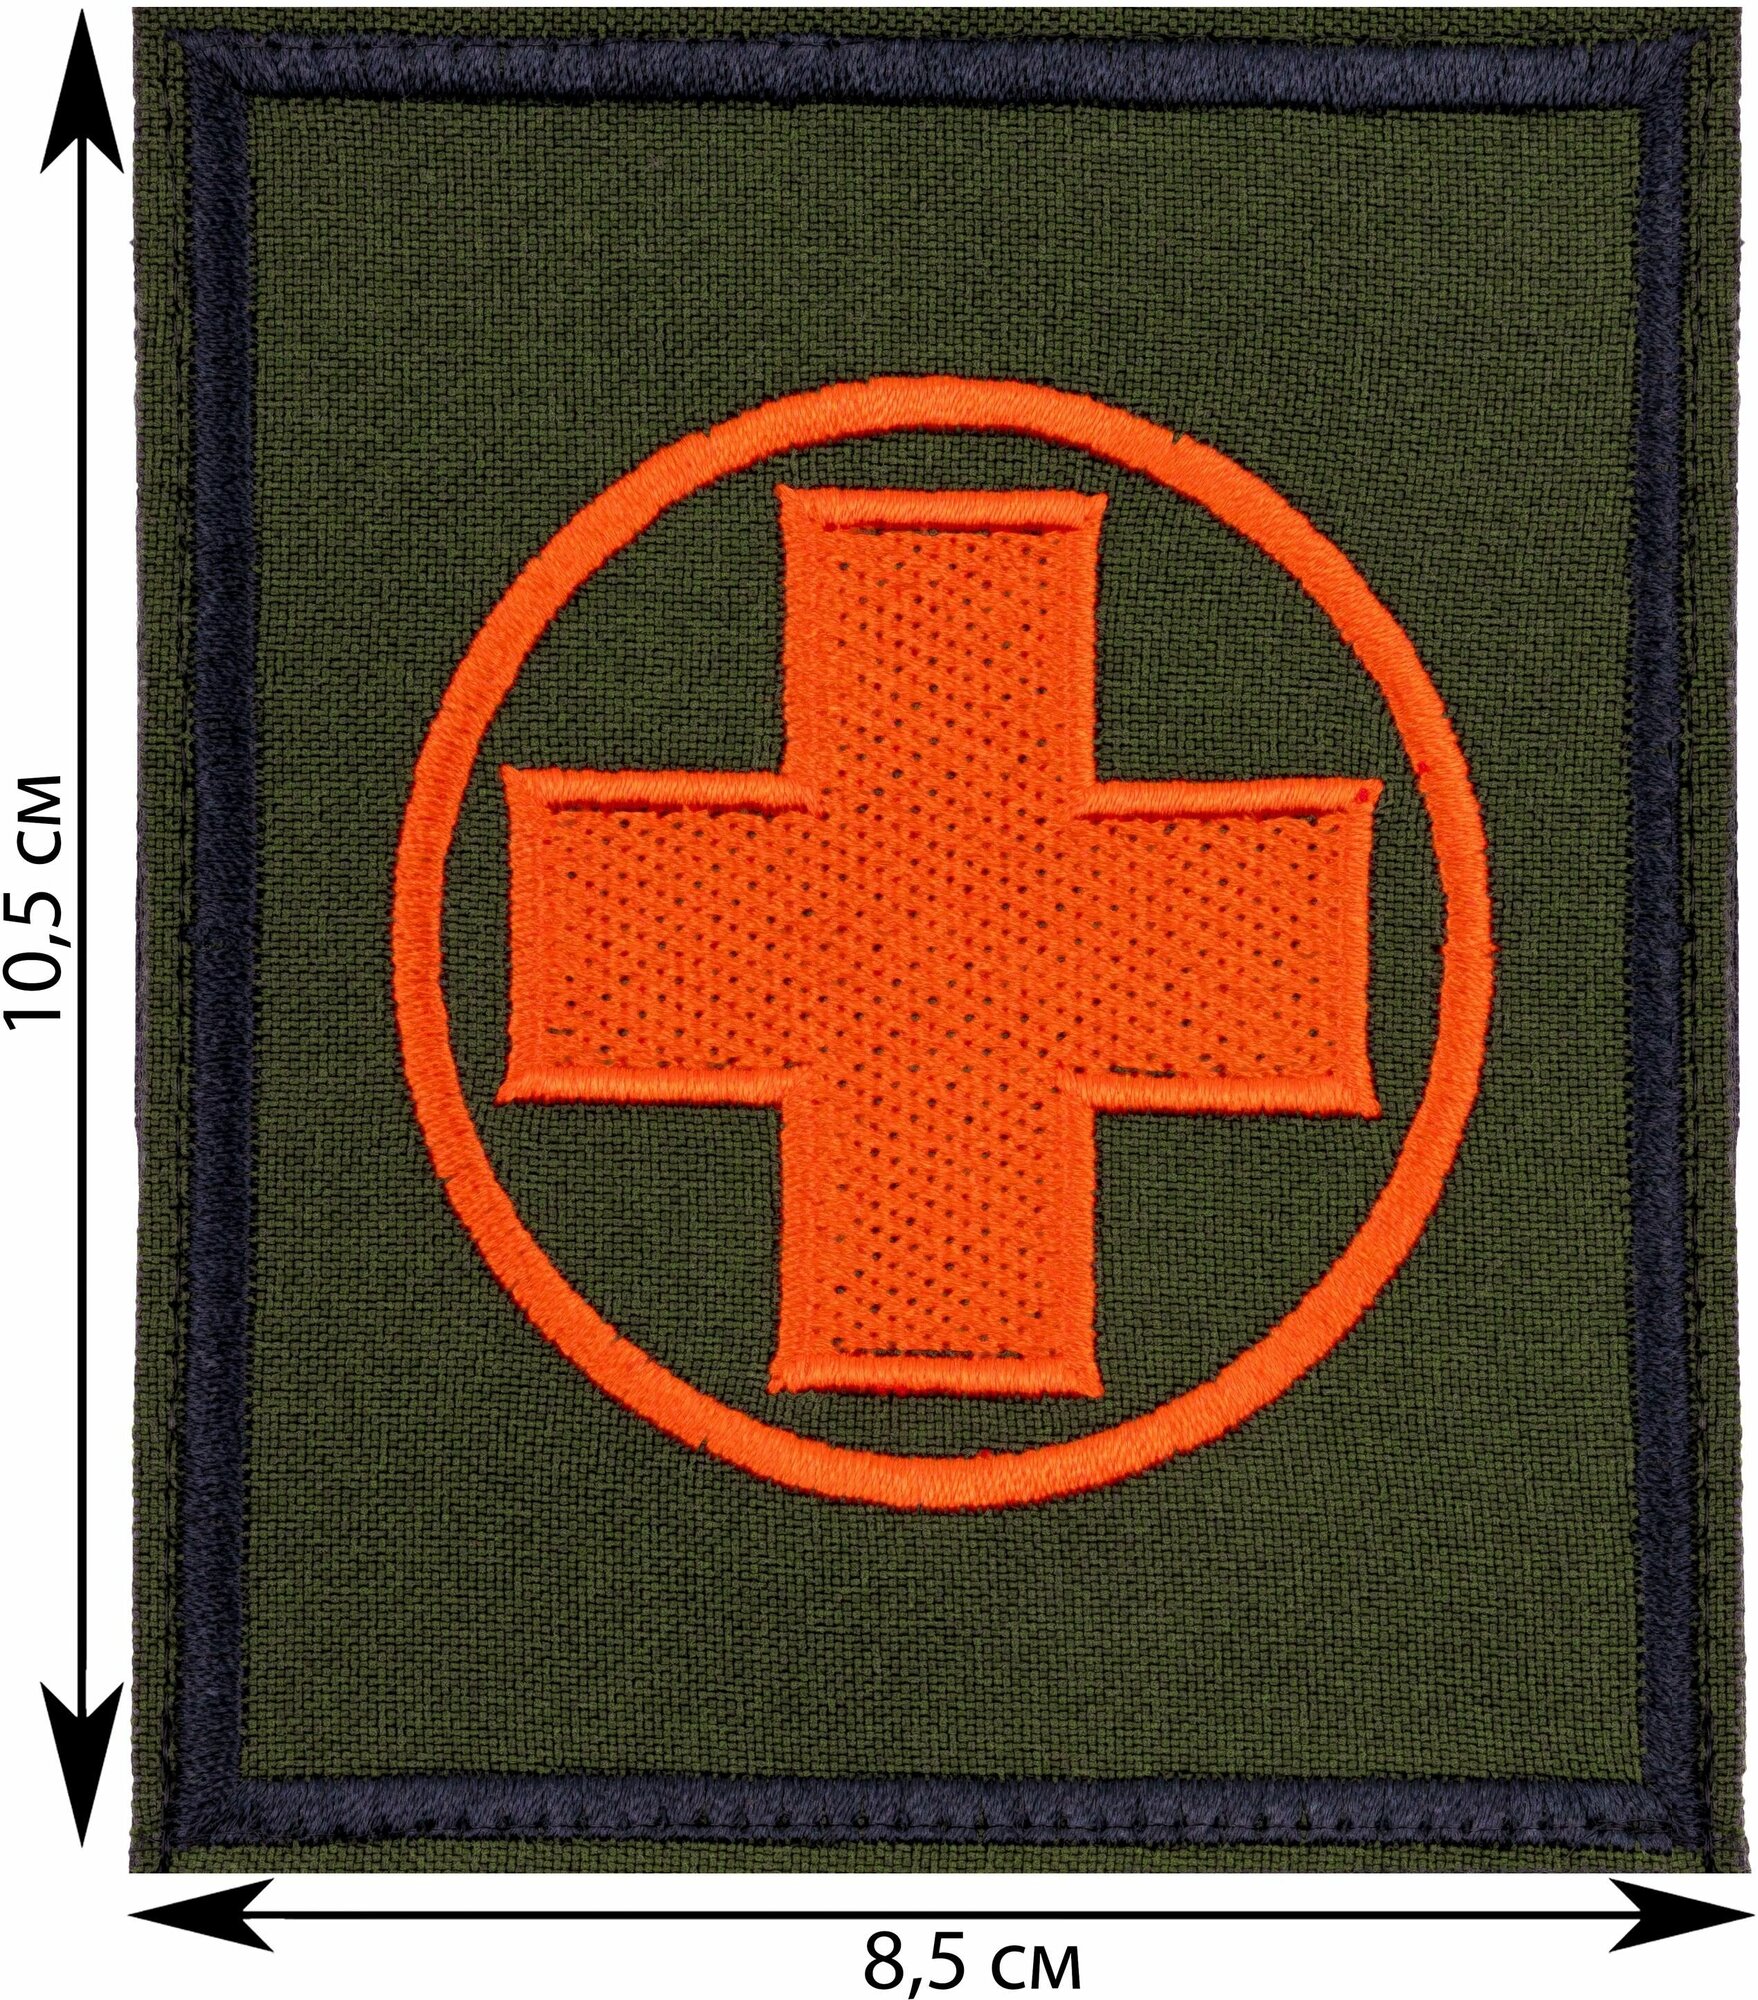 Нашивка, шеврон, патч (patch) на липучке Медицинский крест, размер 10,5*8,5 см